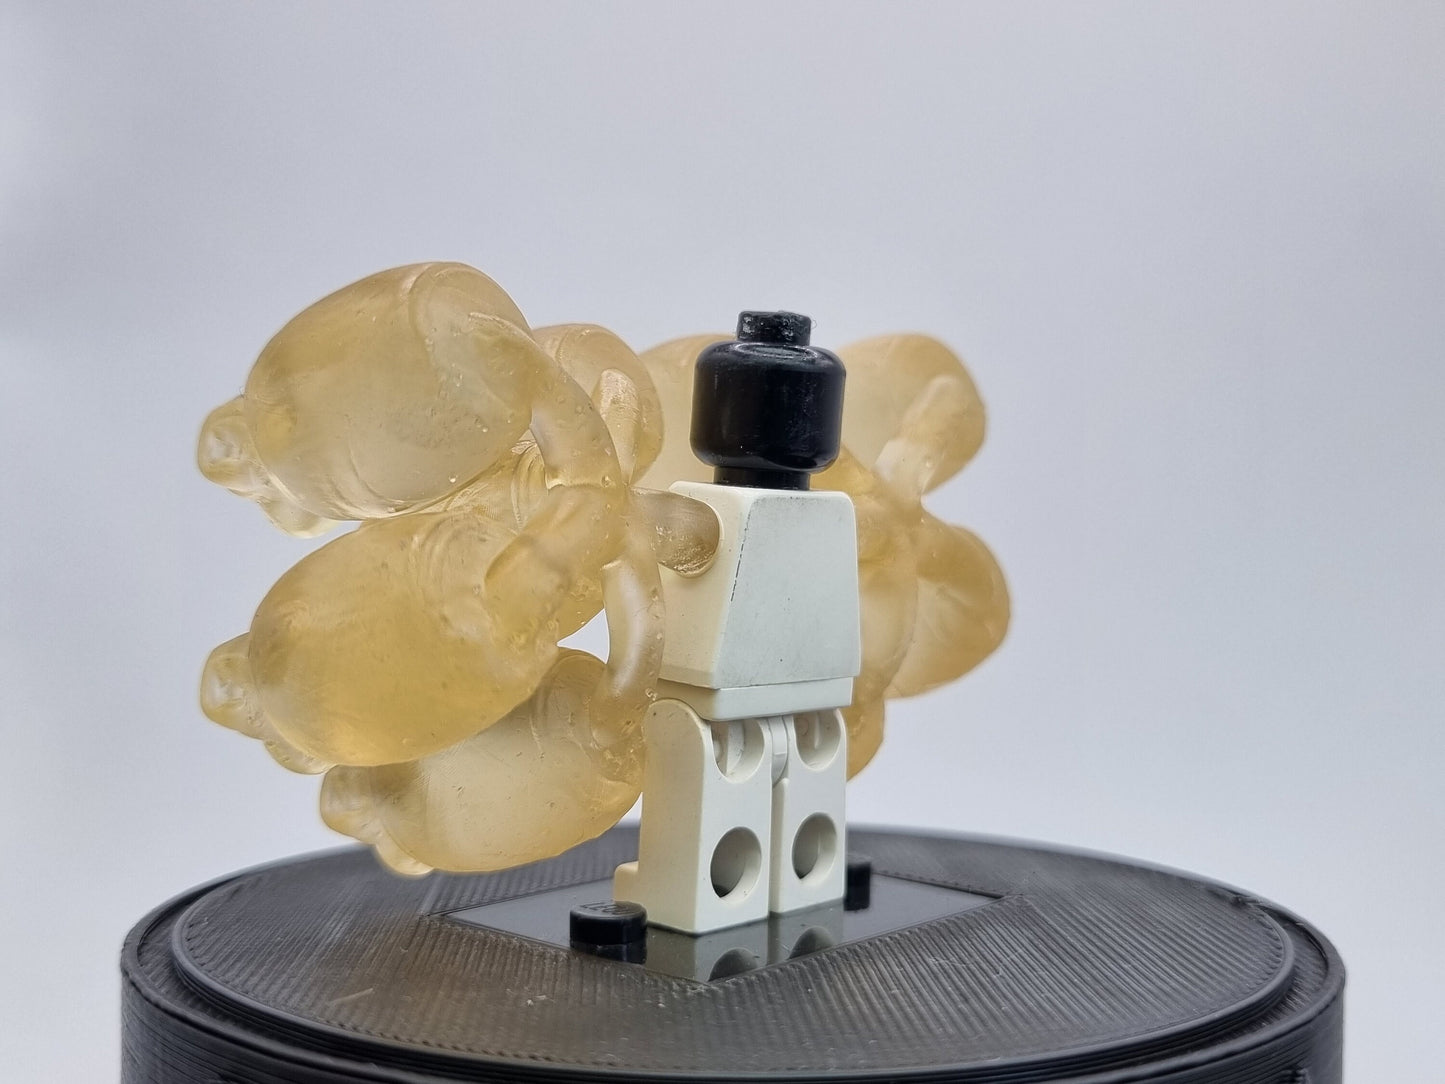 Building toy custom 3D printed transparent gatling arms!